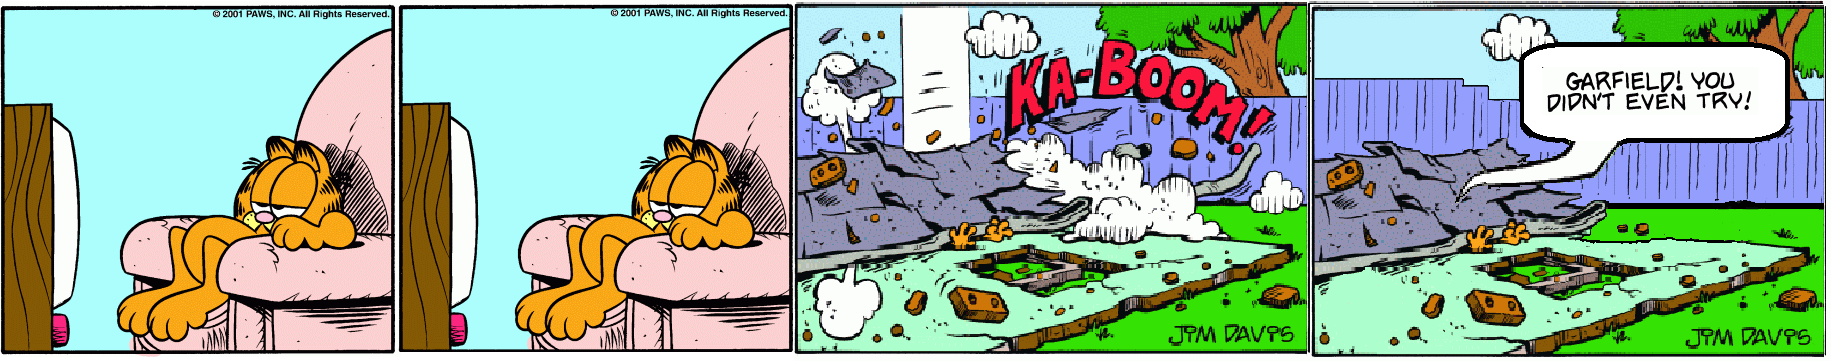 Garfield Stops Trying